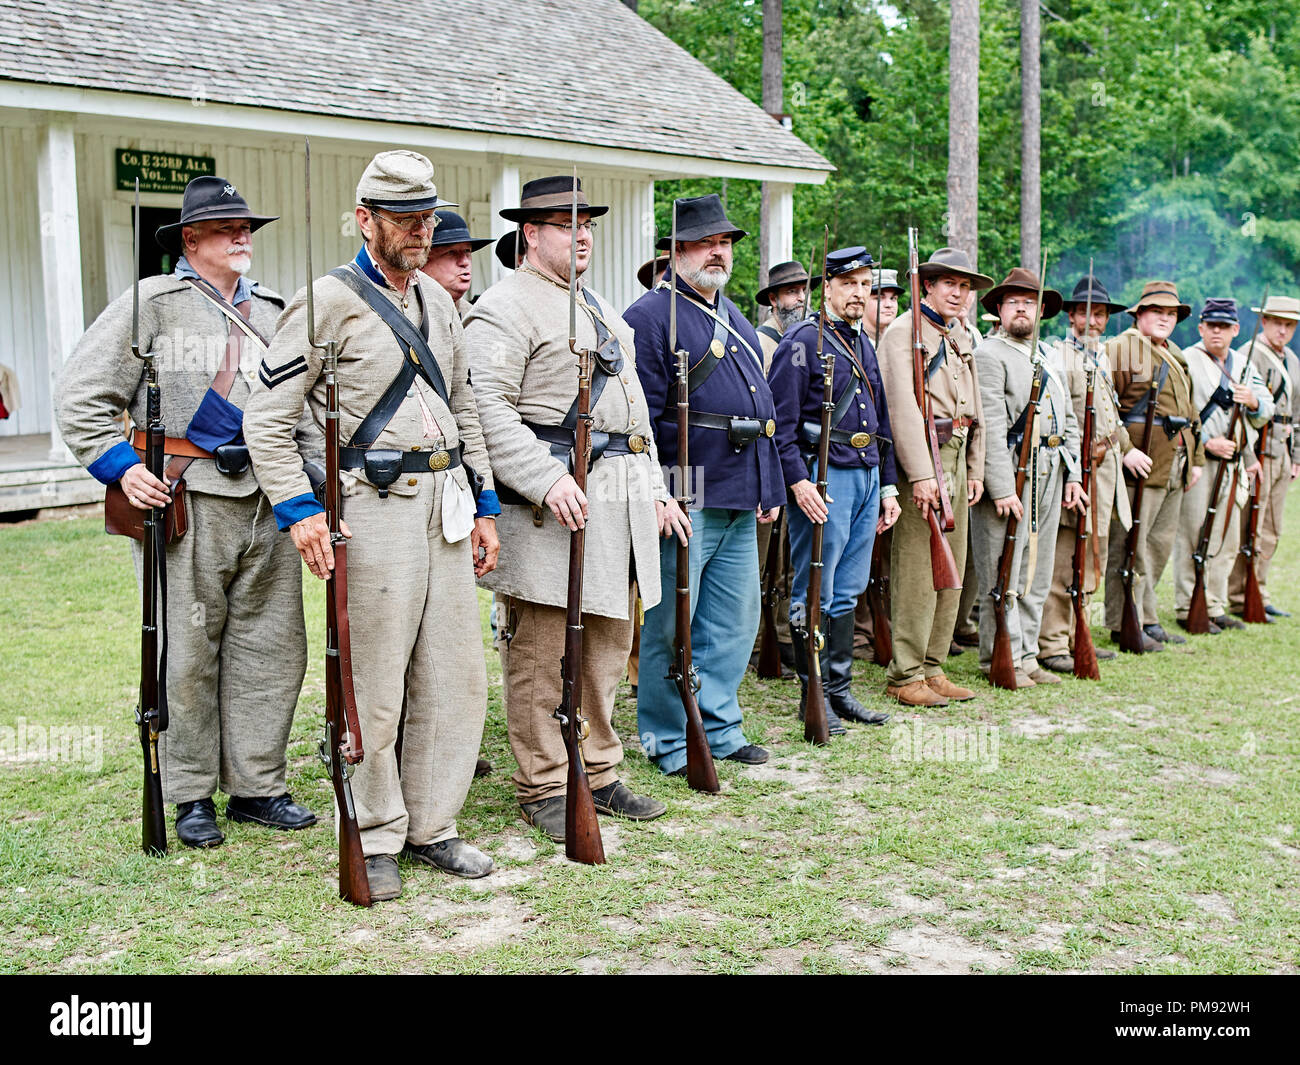 Confederate Soldiers Uniforms